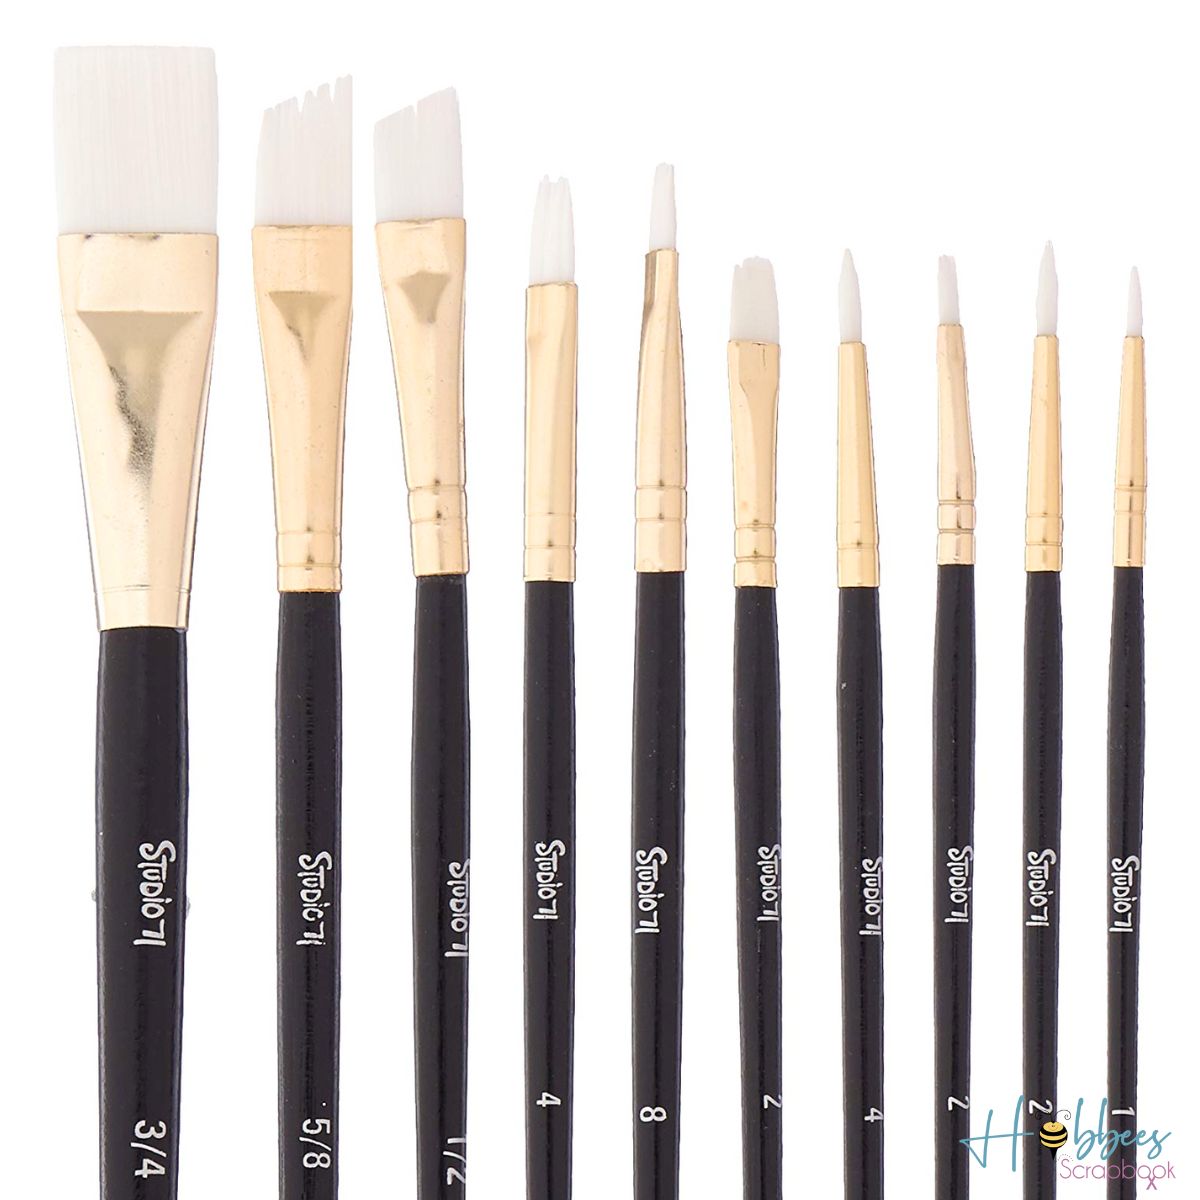 Studio 71 White Nylon Brushes / Pinceles de Nailon blanco